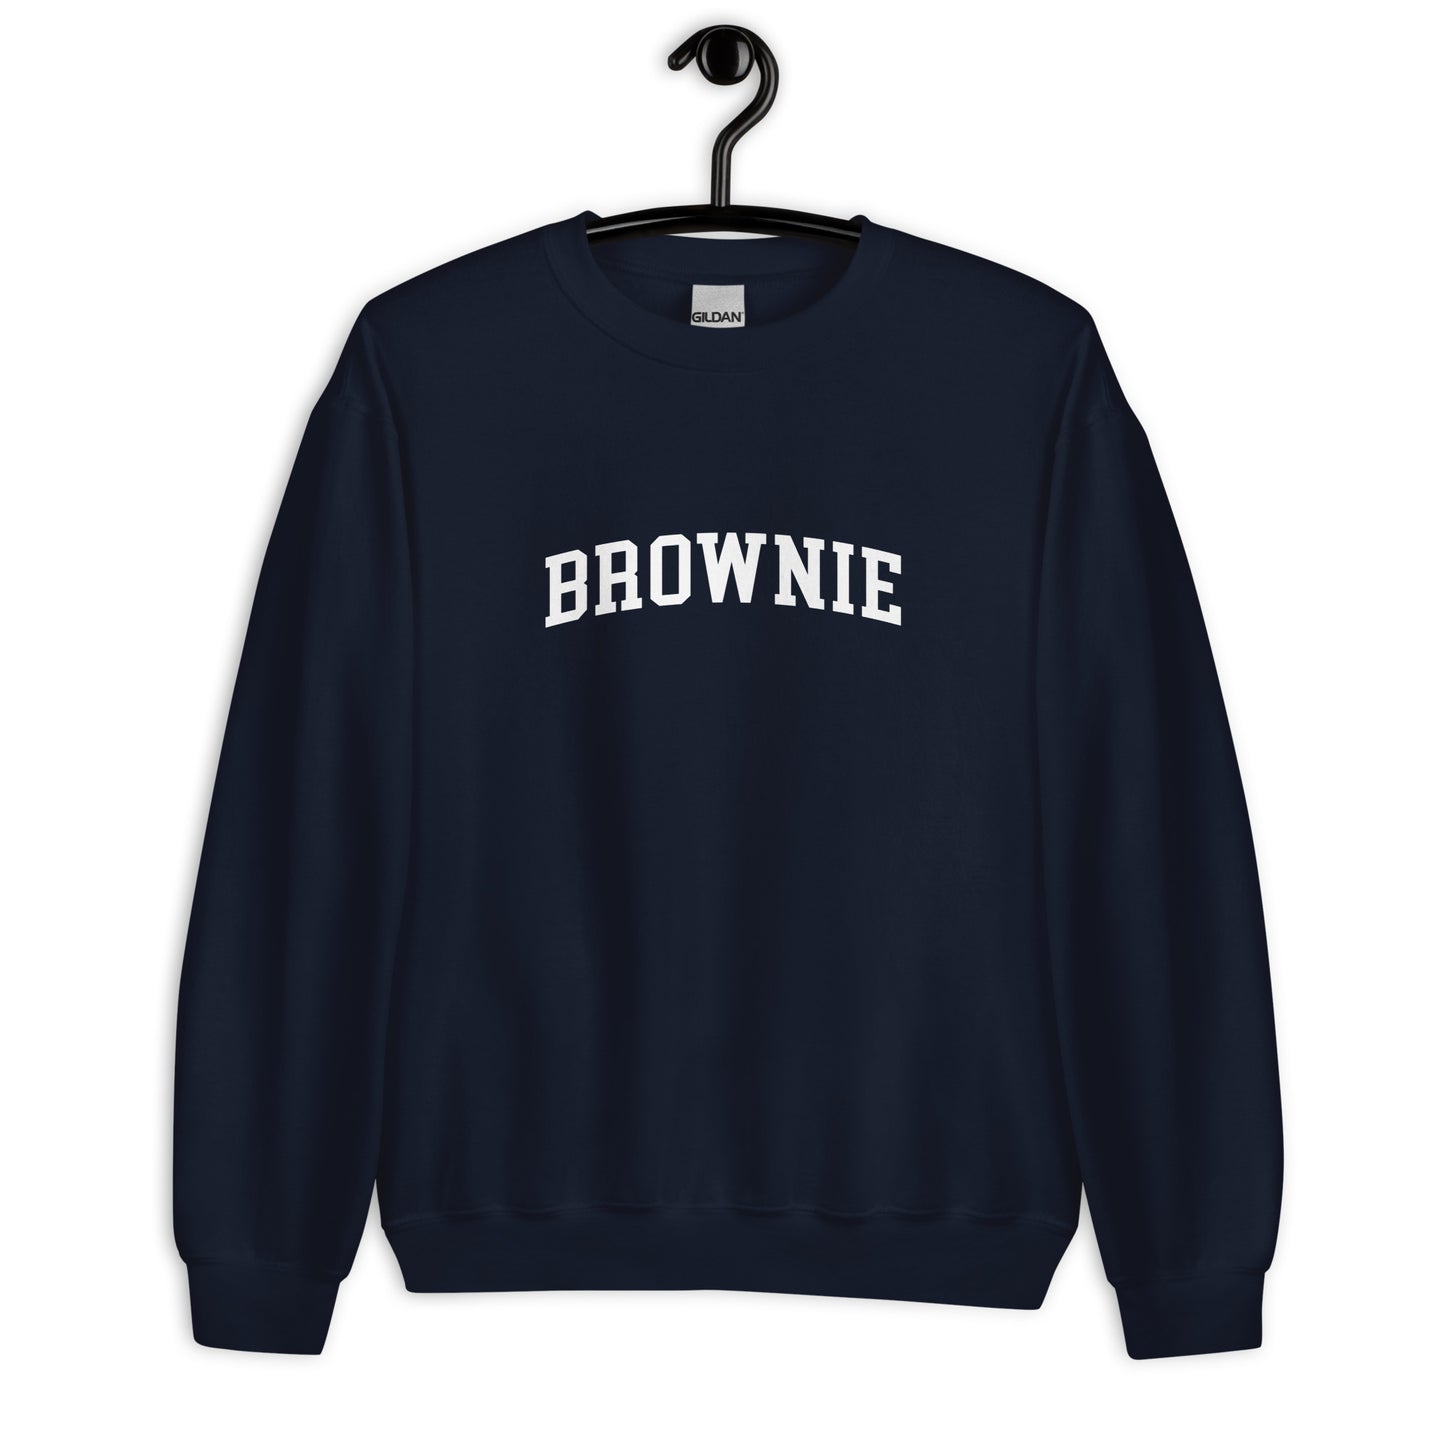 Brownie Sweatshirt - Arched Font